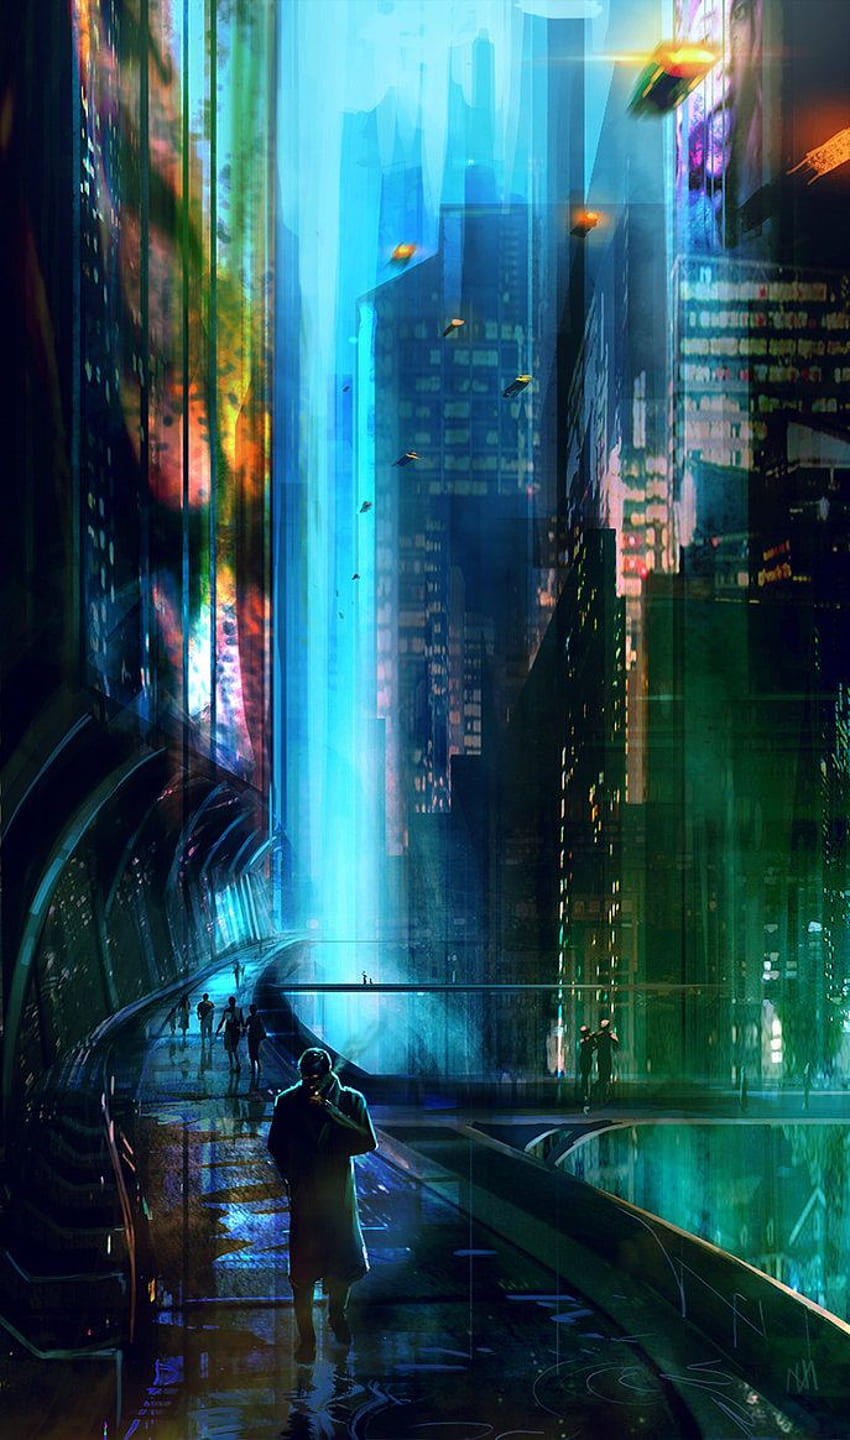 100+] Blade Runner 2049 Wallpapers | Wallpapers.com